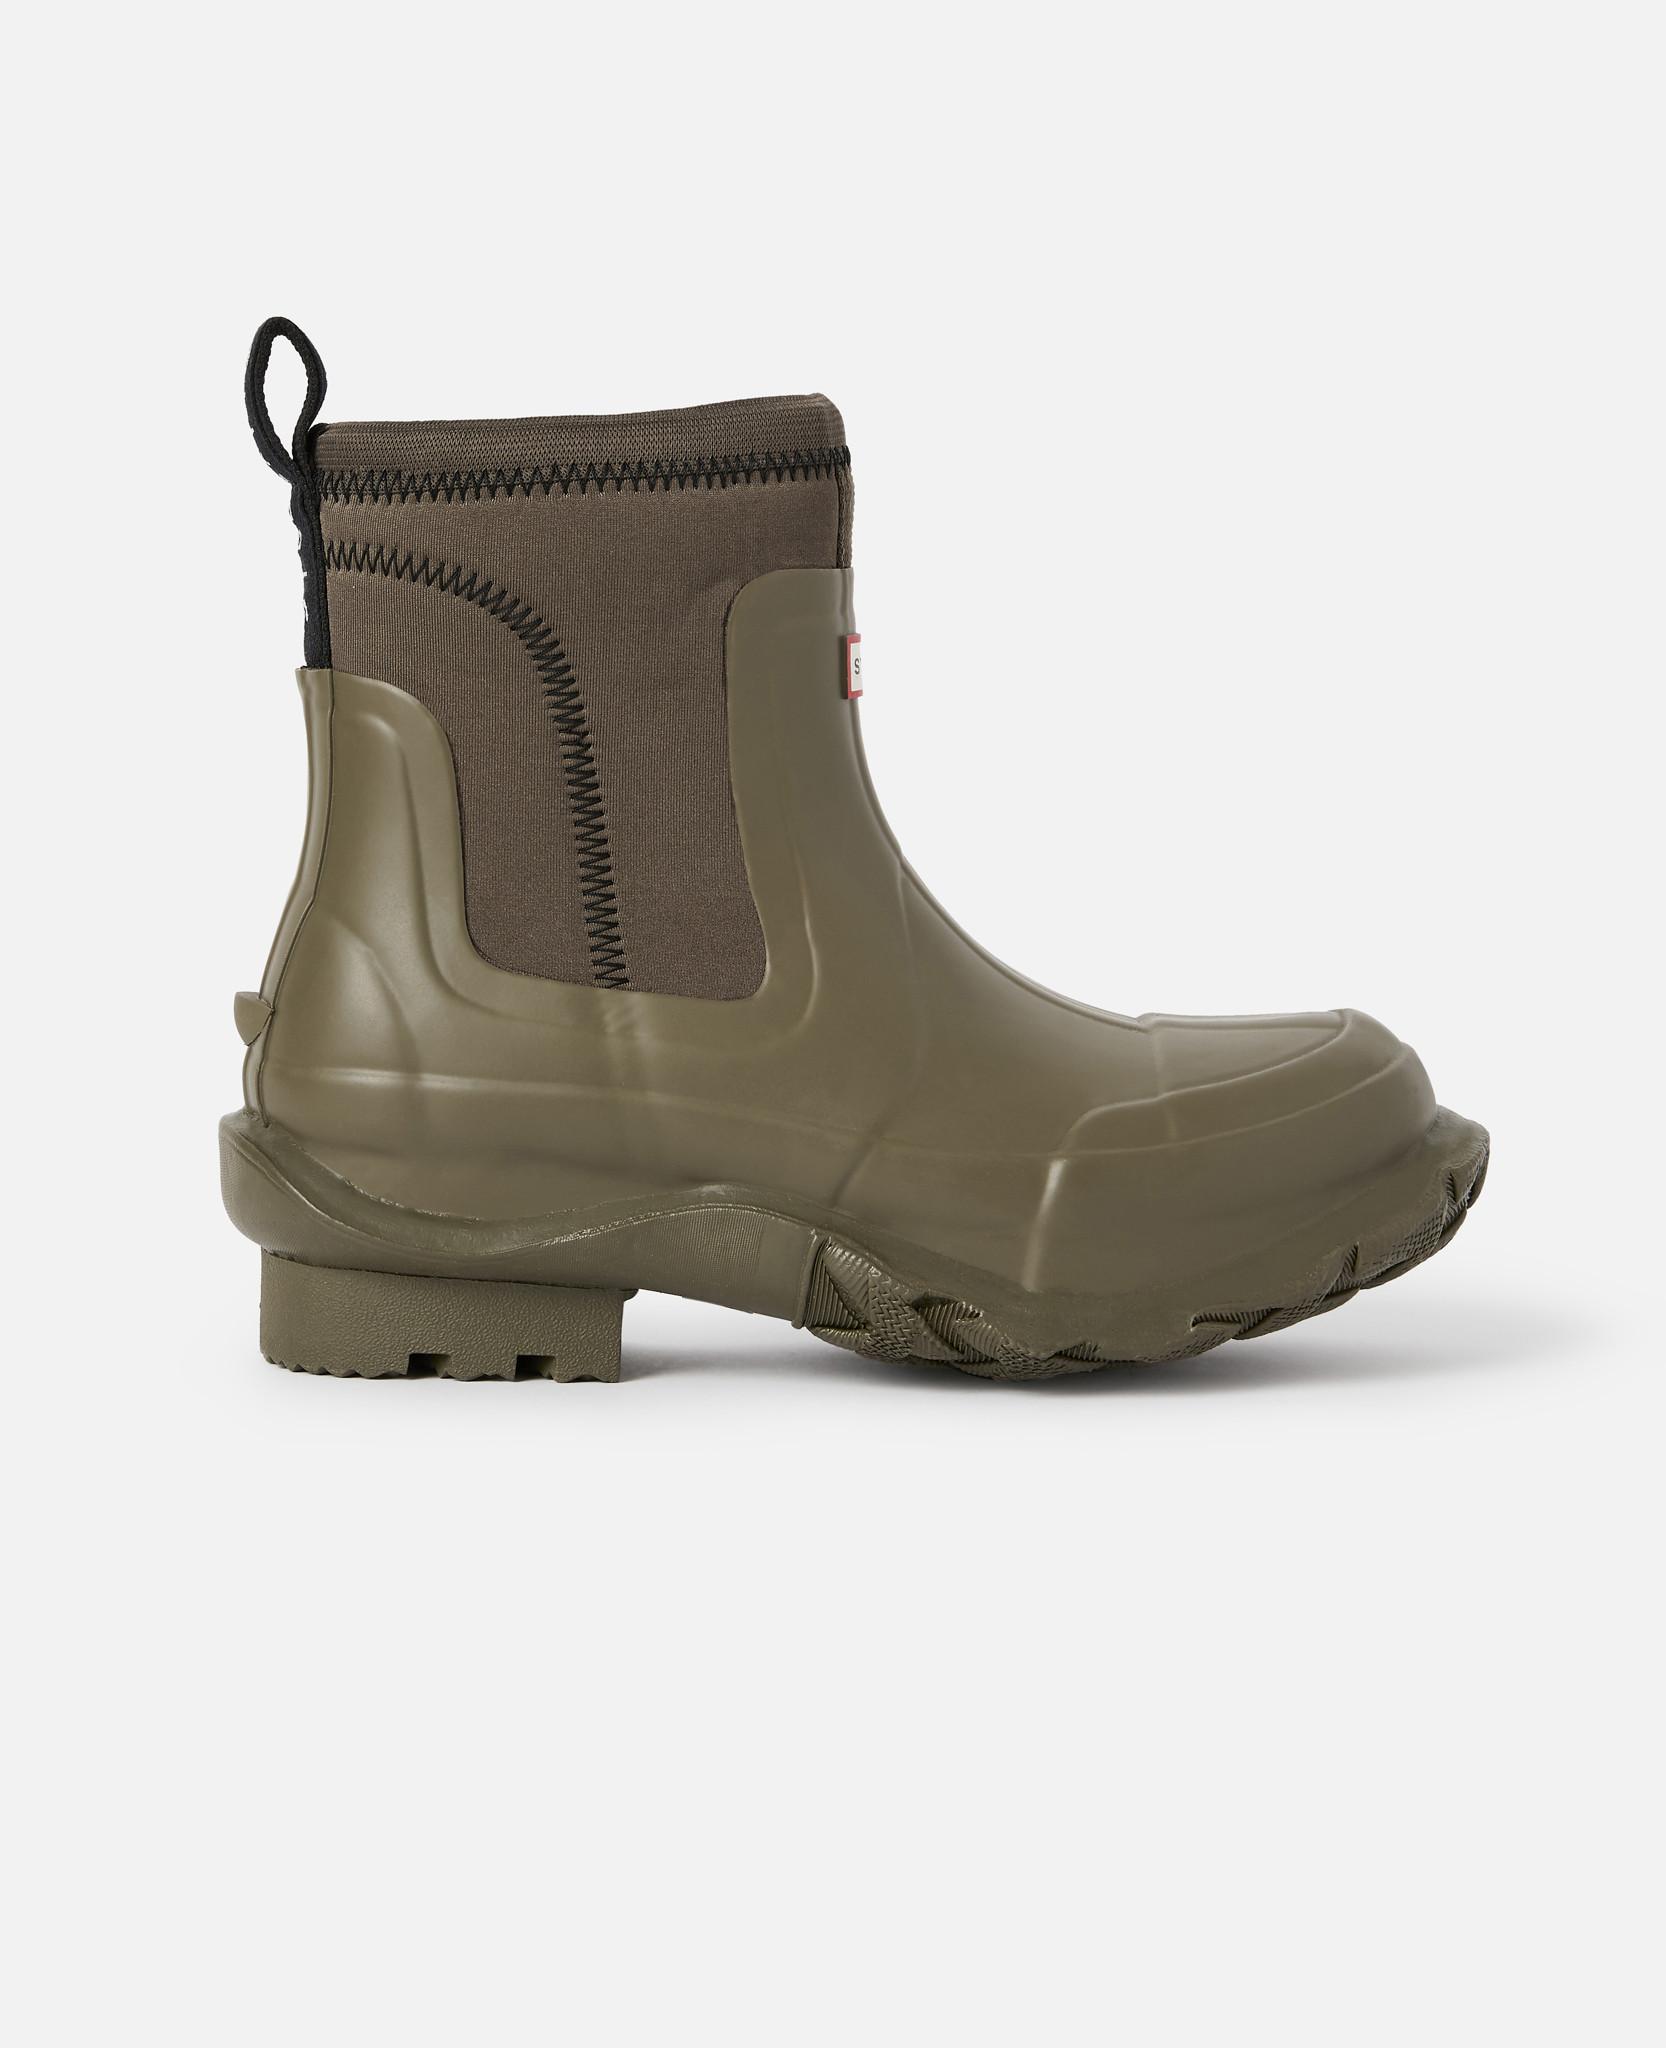 Stella McCartney Rubber X Hunter Rain Boots in Green - Lyst